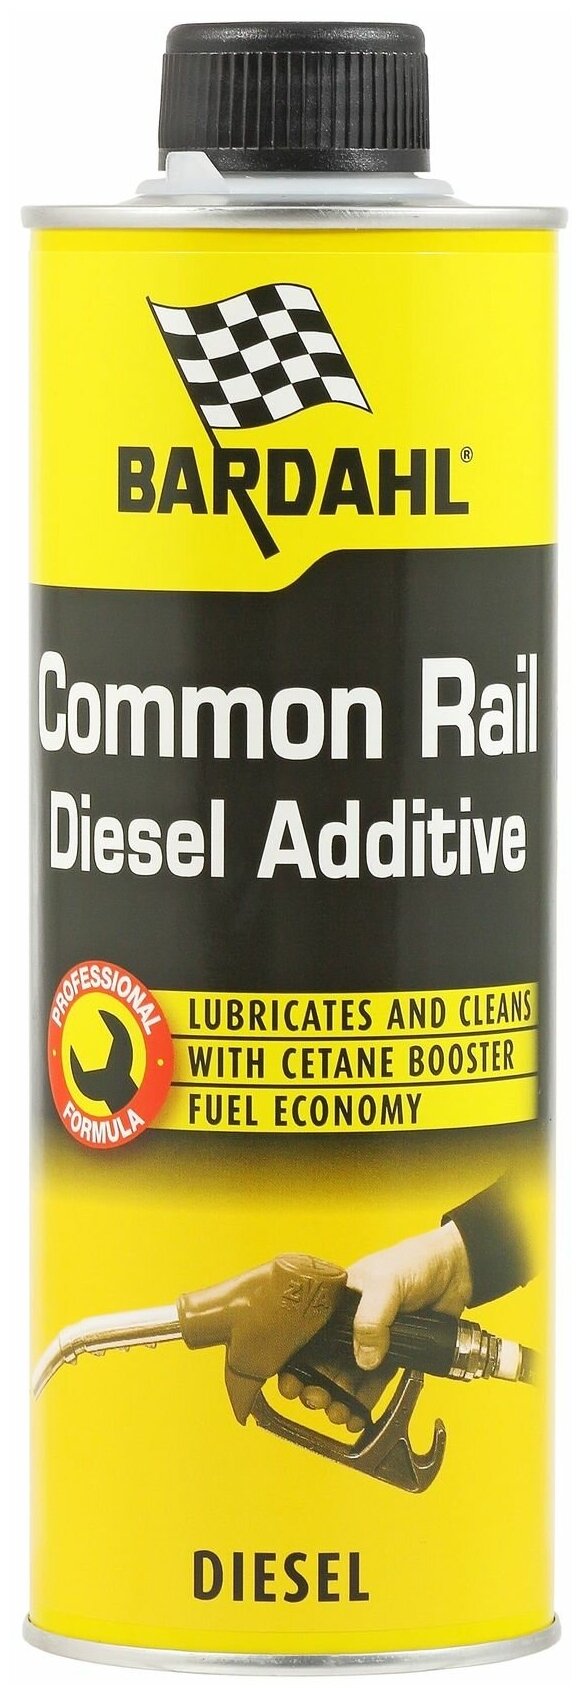 Bardahl Diesel Additive